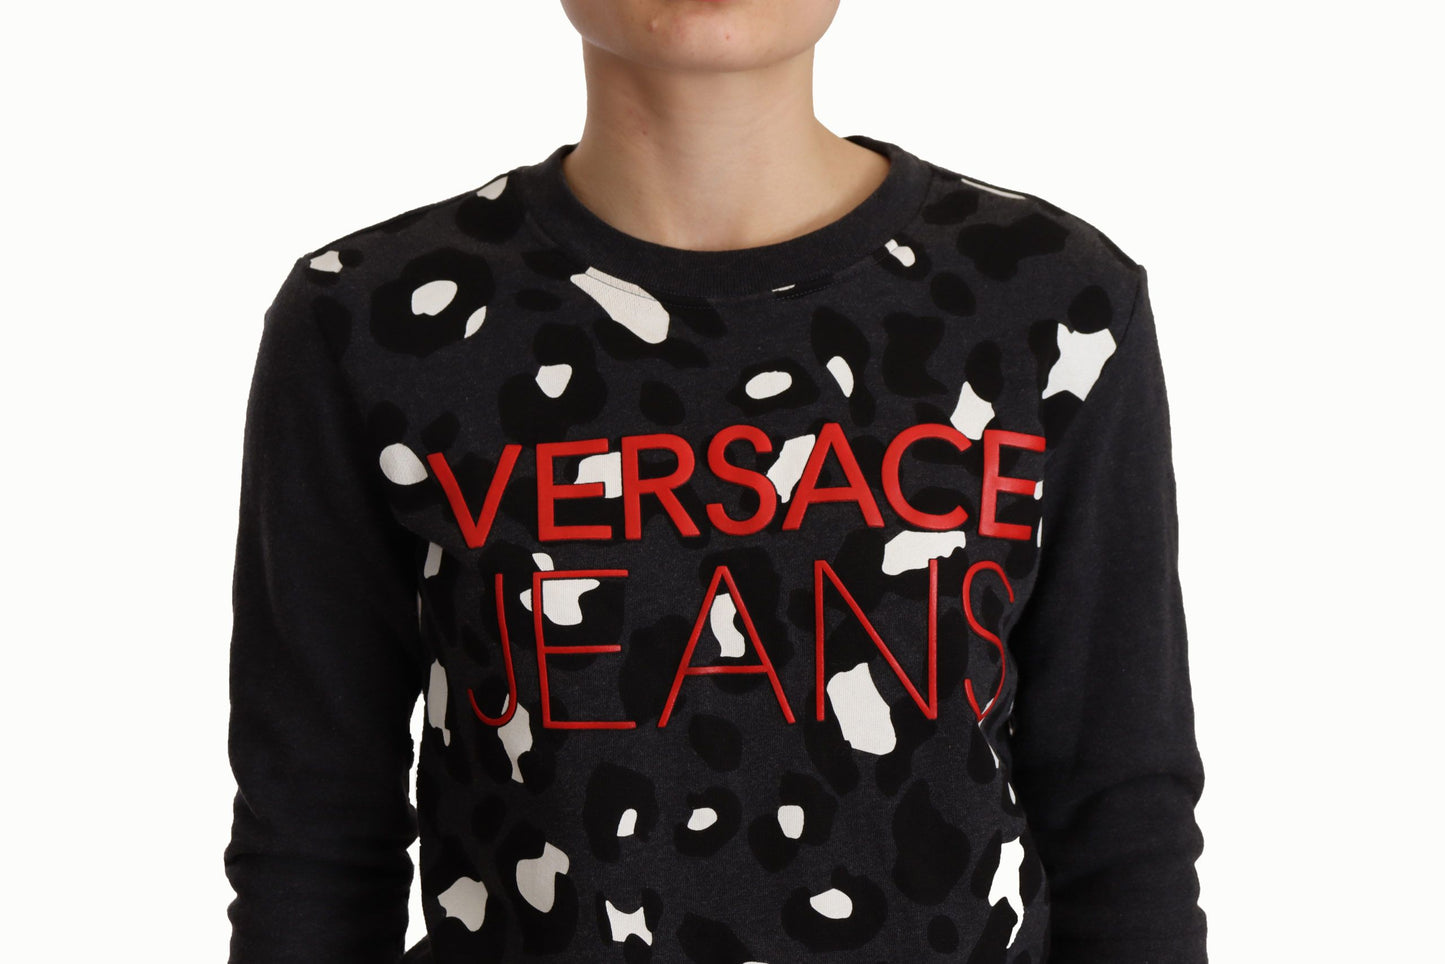 Versace Jeans Chic Black Leopard Crew Neck Pullover